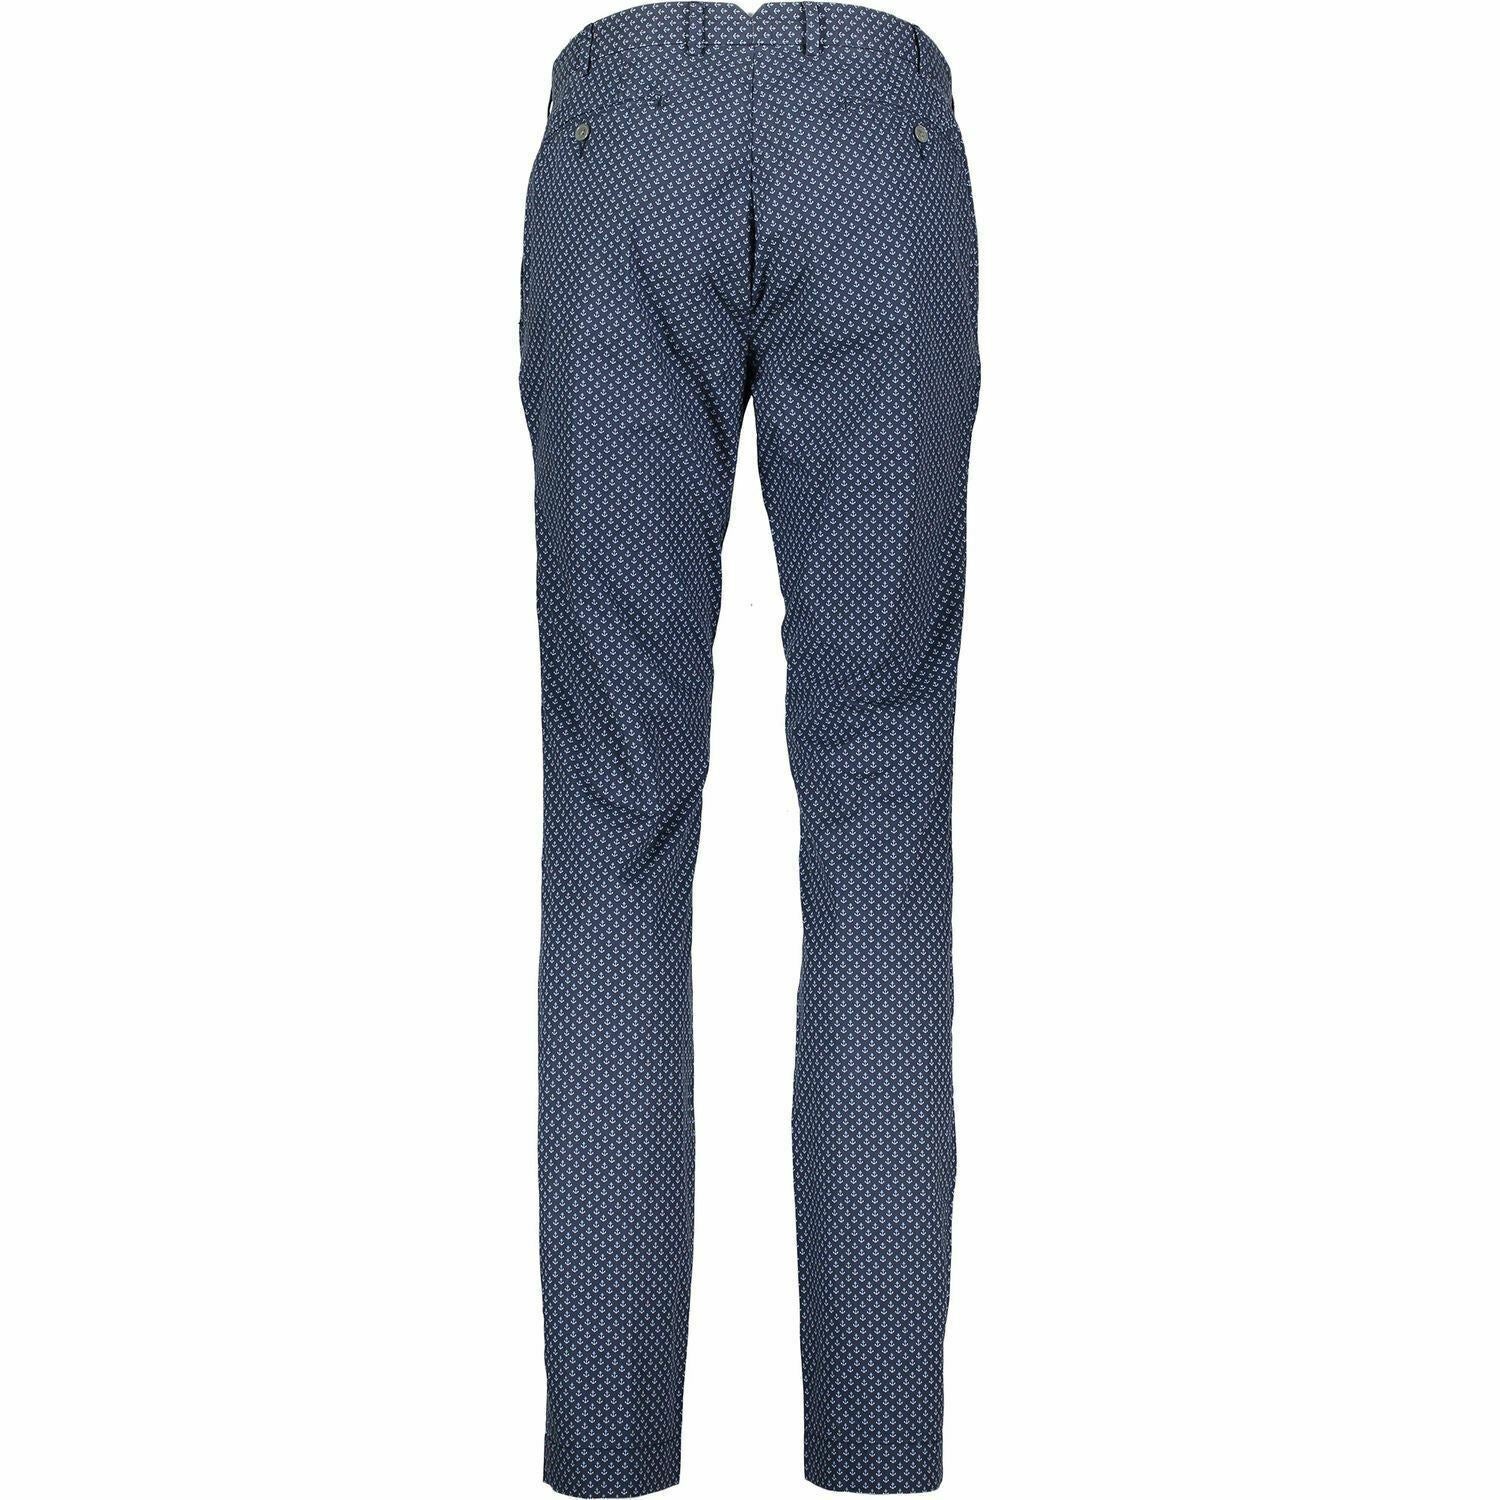 POLO RALPH LAUREN Men's HUDSON Chino Trousers, Blue/Anchor Print, size W31 L34